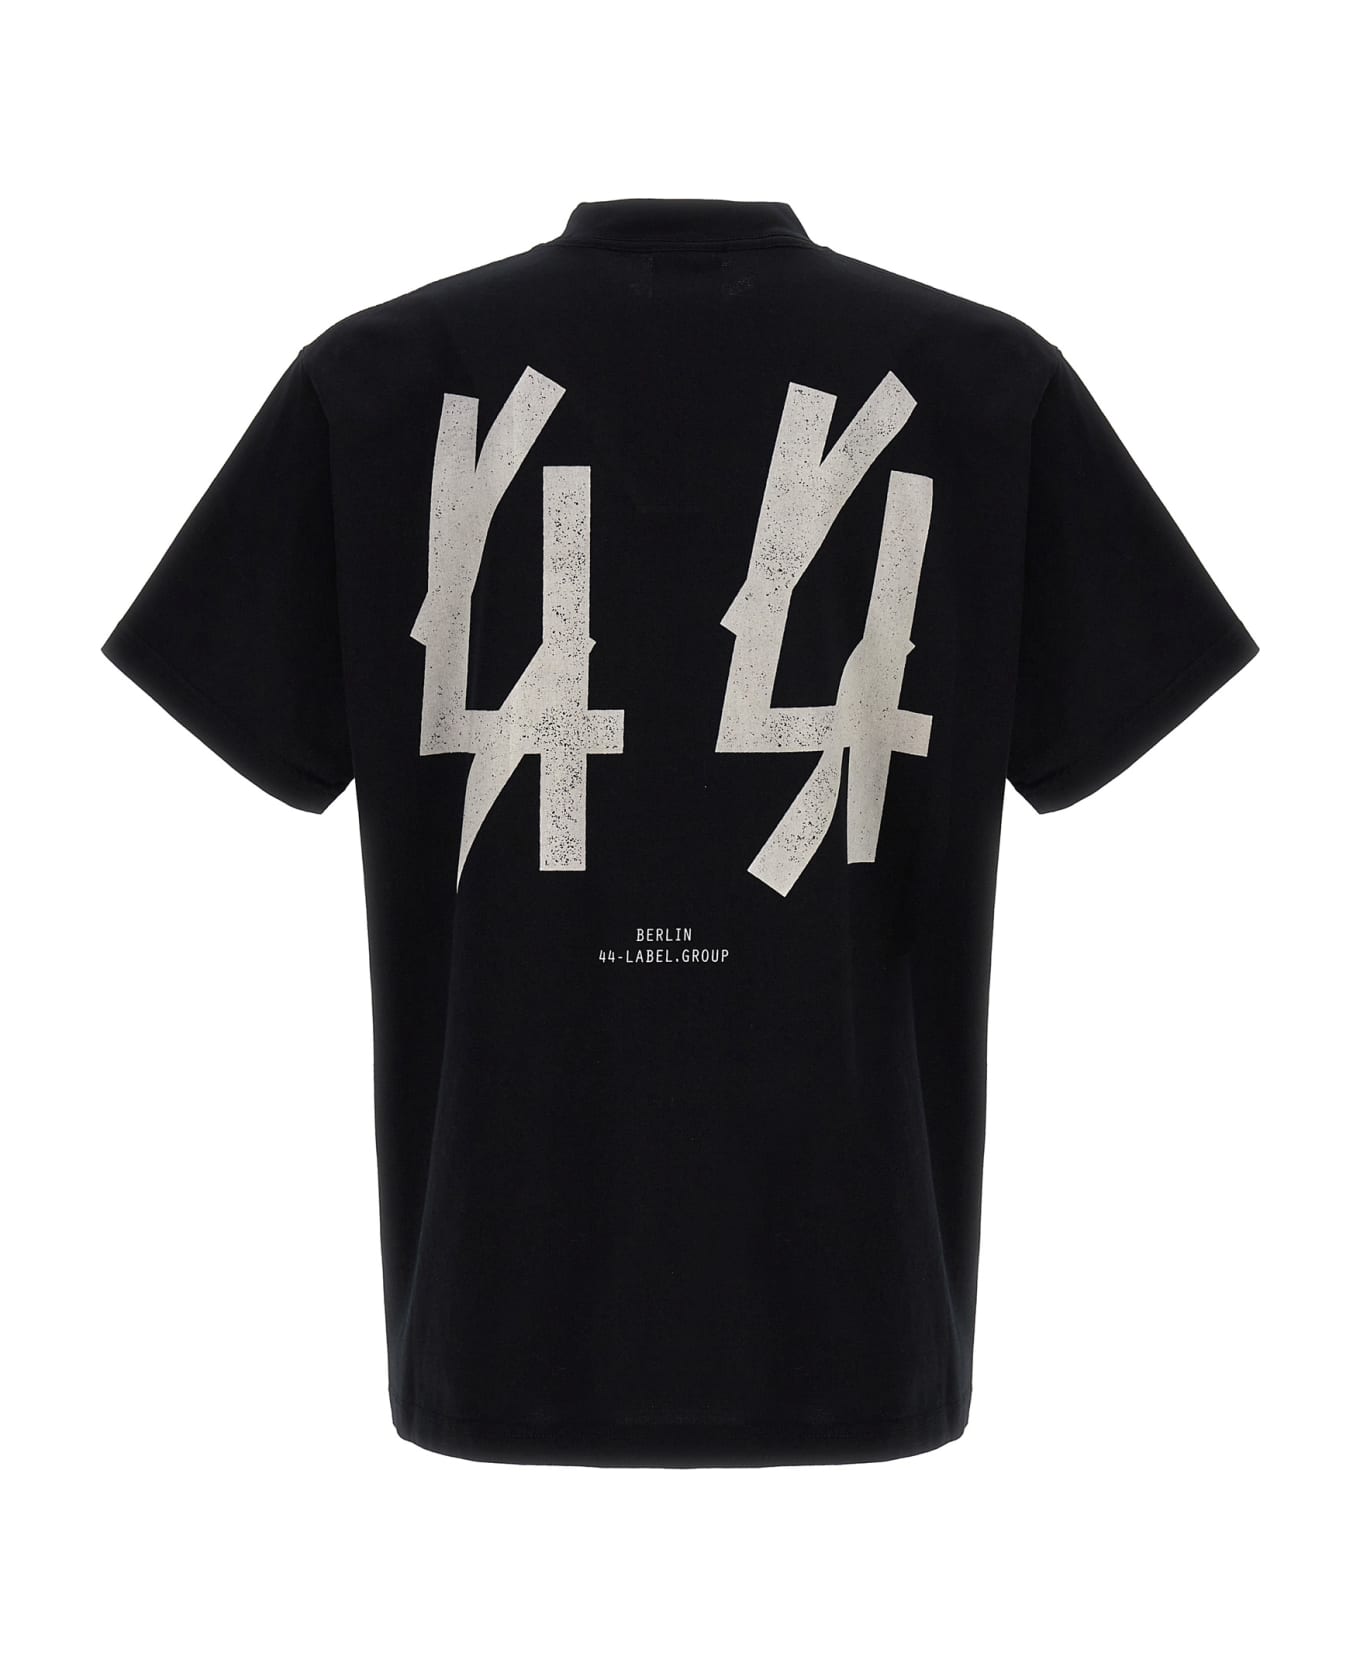 44 Label Group T-shirt Guestlist/berlin Sub' T-Shirt - BLACK シャツ